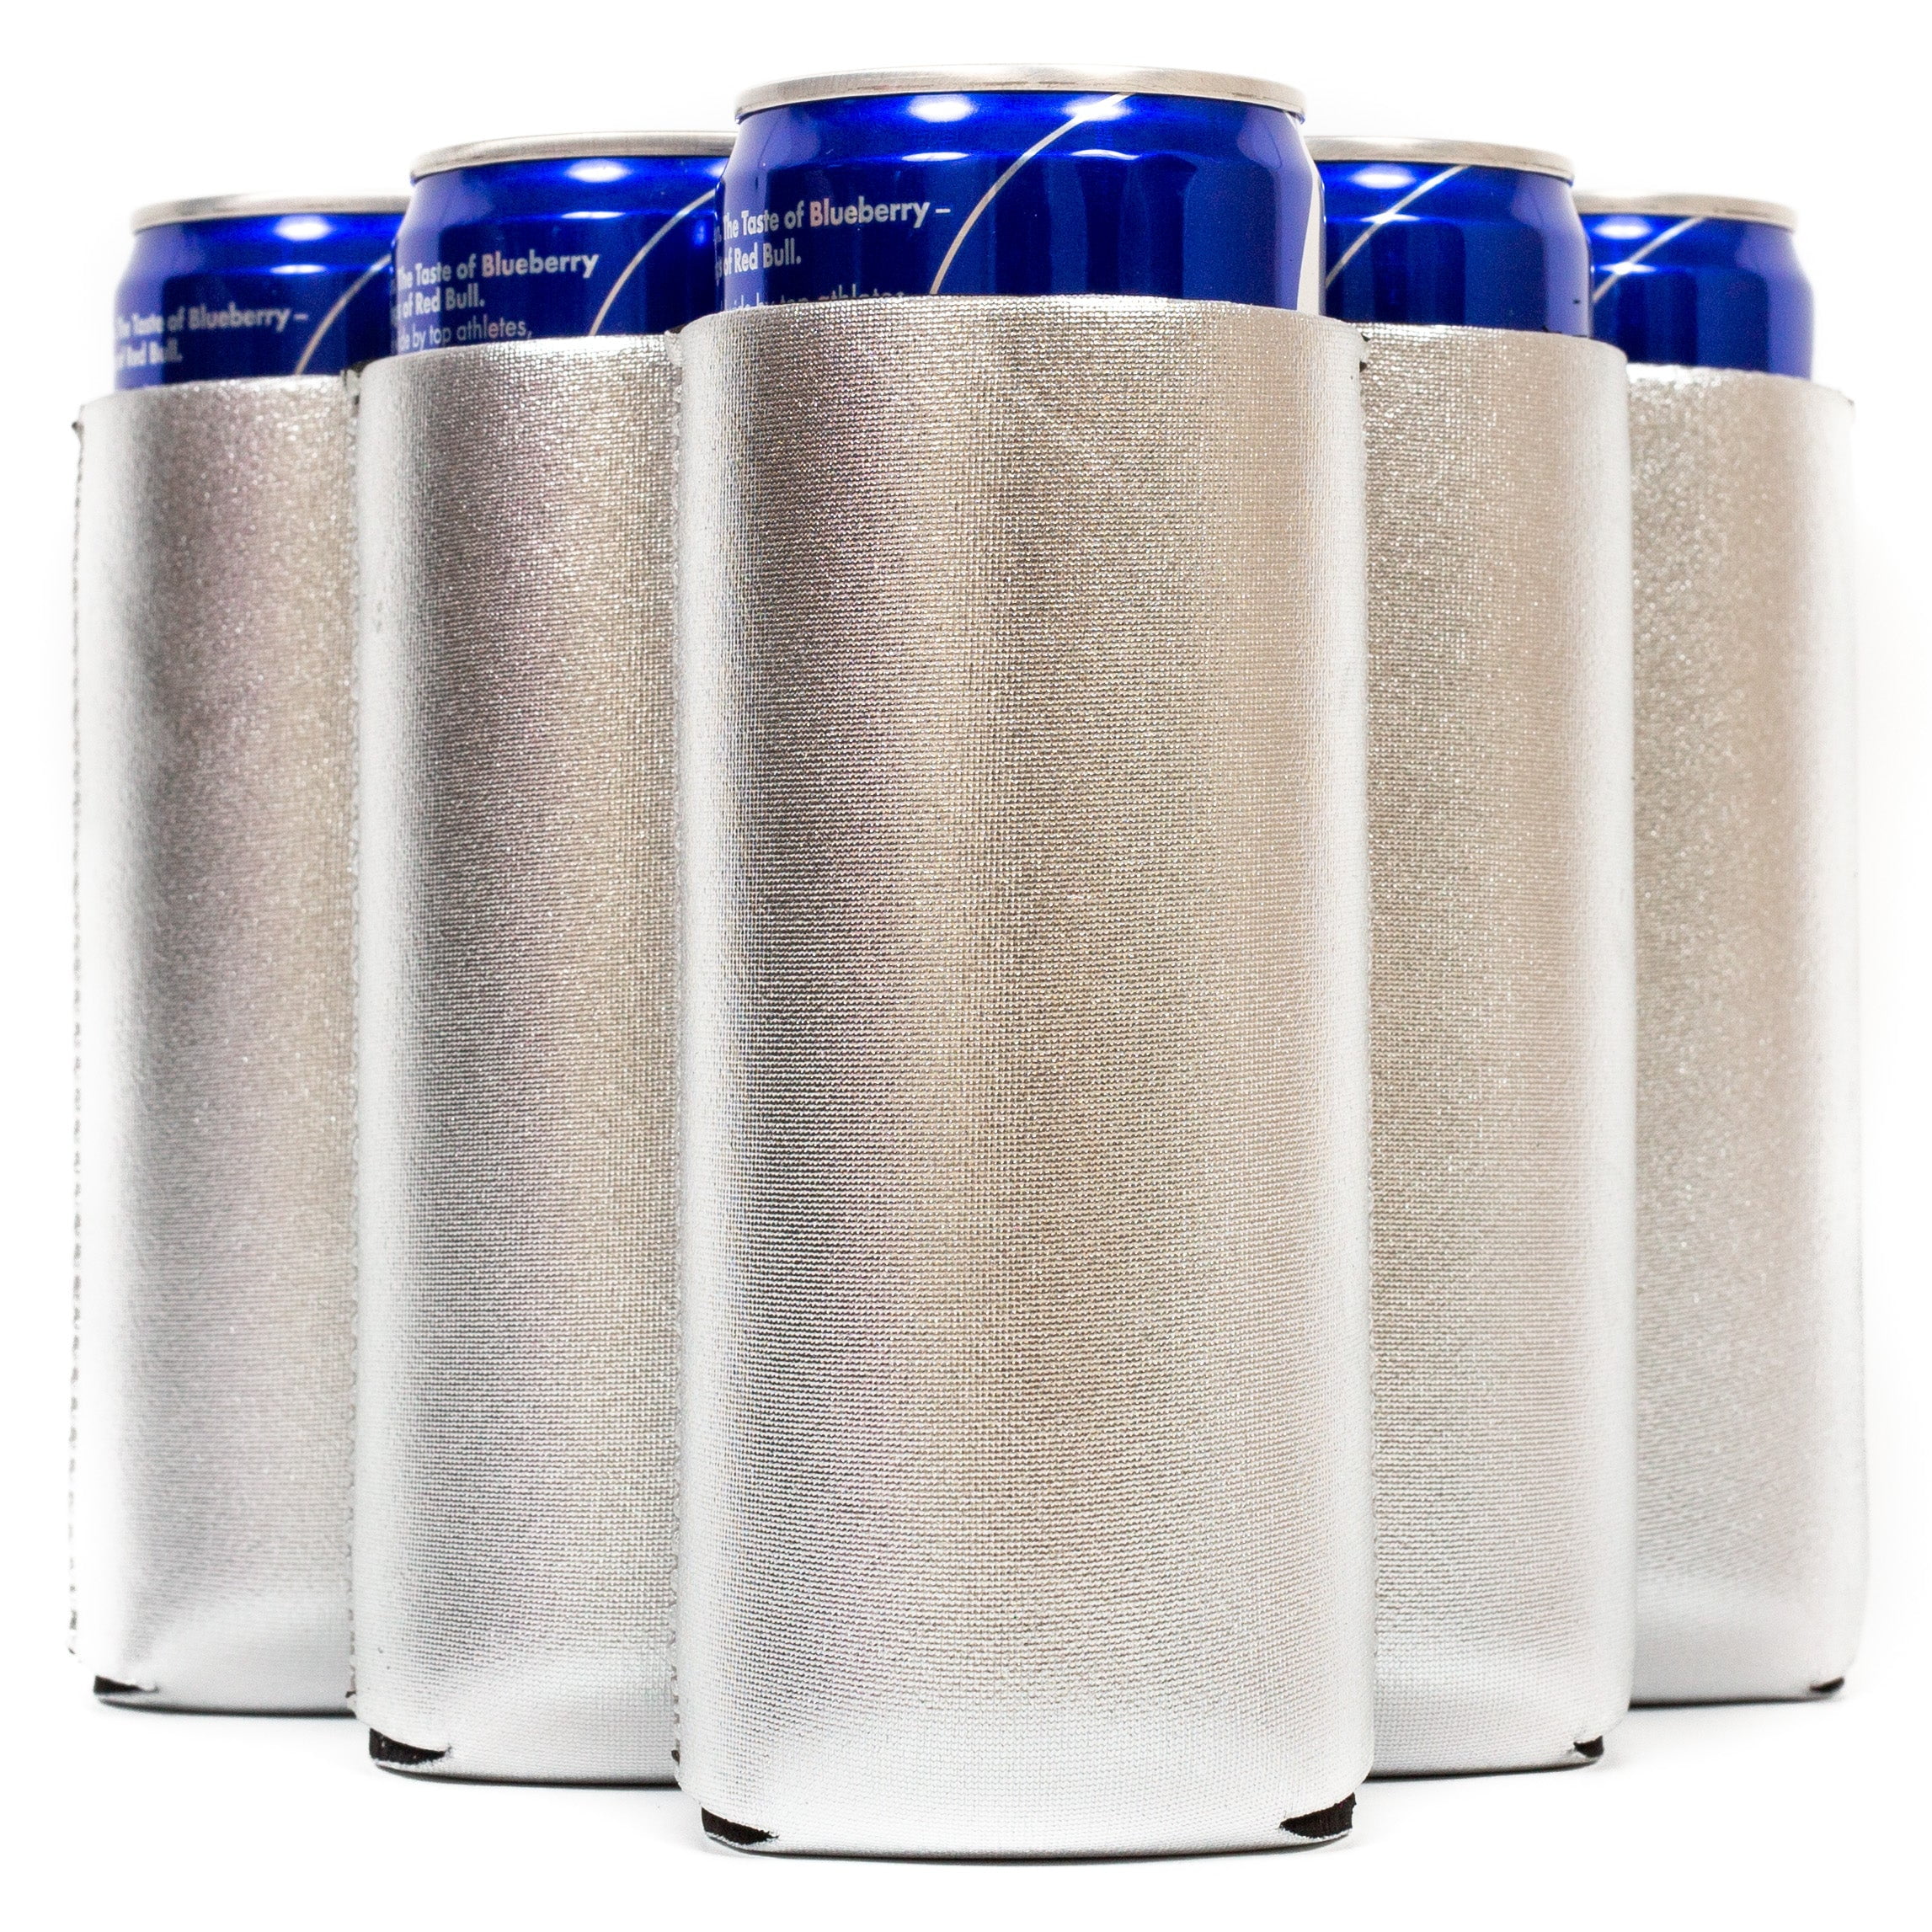 Football 12oz 2-Pack Slim Skinny Can Holder Insulator Beverage Huggie  Cooler Coozies (Dallas (Cowboys))